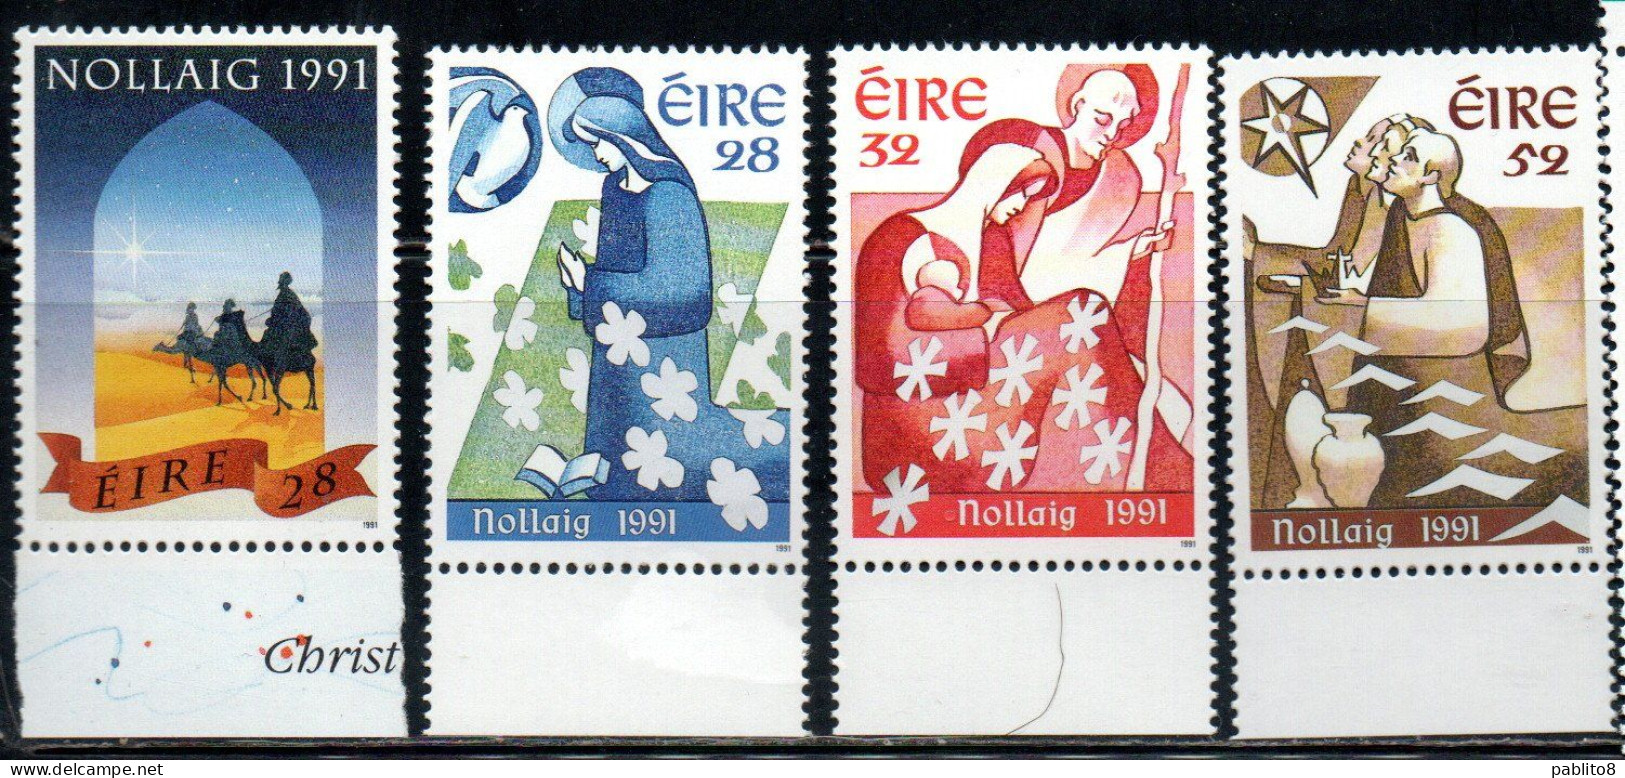 EIRE IRELAND IRLANDA 1998 CHRISTMAS ANNUNCIATION NOLLAIG NATALE NOEL WEIHNACHTEN NAVIDAD COMPLETE SET SERIE COMPLETA MNH - Unused Stamps